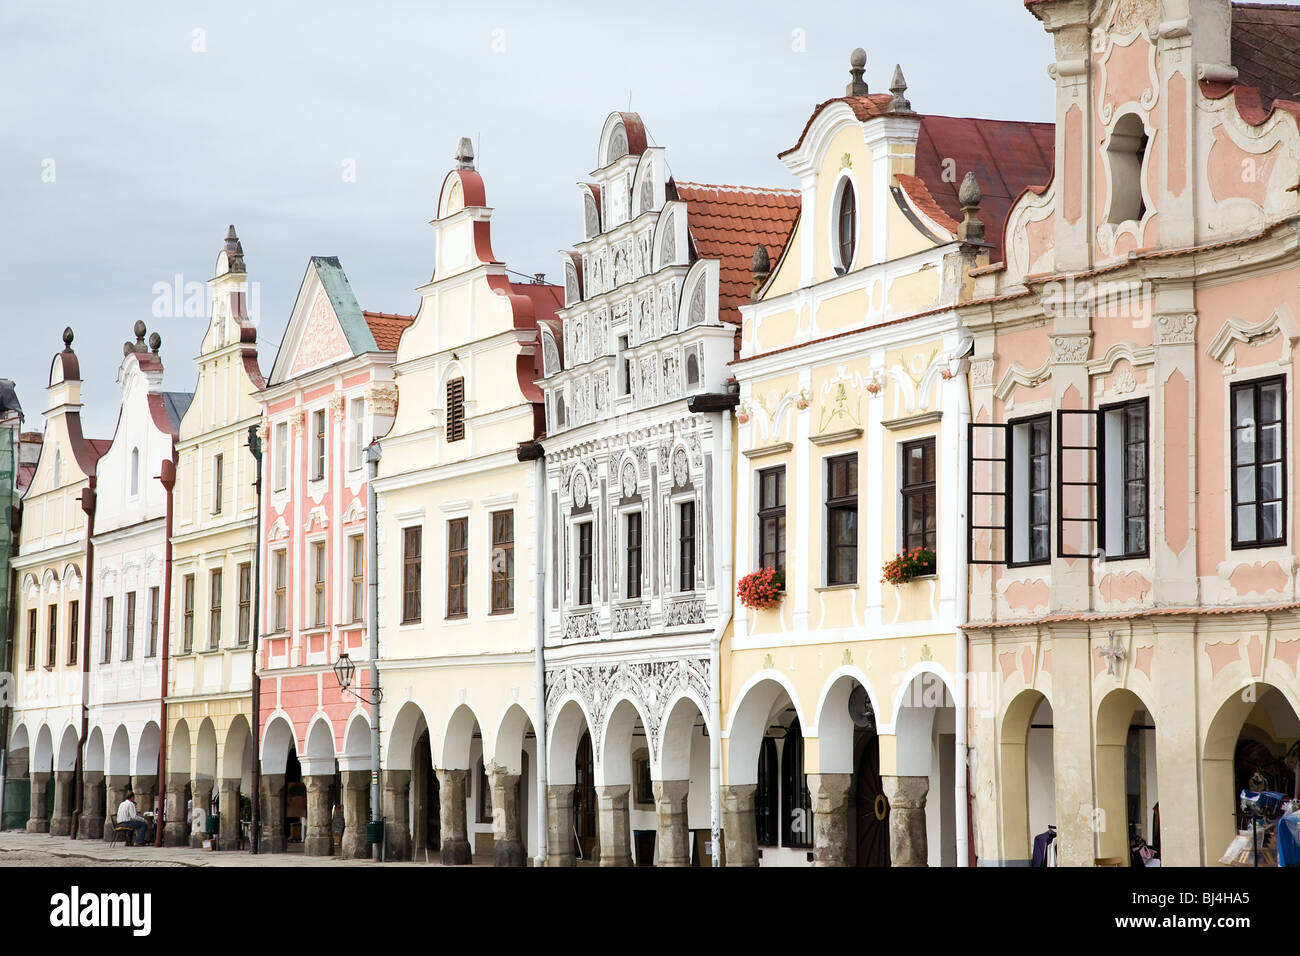 Fassade der Stadt beherbergt mit Arkaden auf dem Platz in Telc, Böhmen - Tschechien. UNESCO geschützten Kulturerbes. Stockfoto